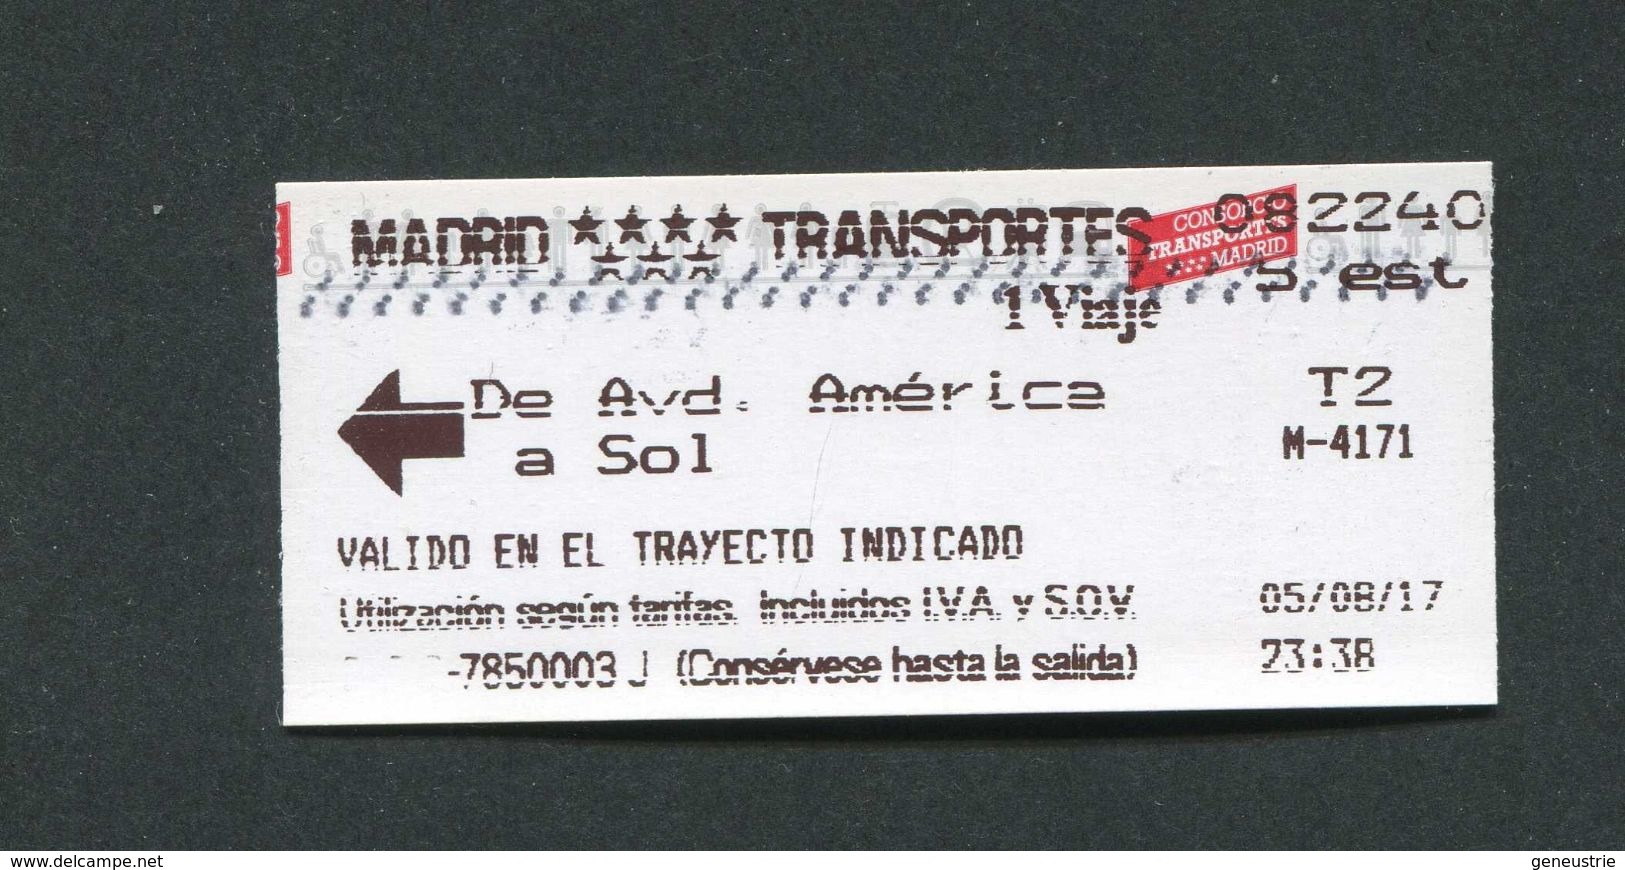 Ticket De Métro Madrid - Billet De Transport - Espagne - Europa